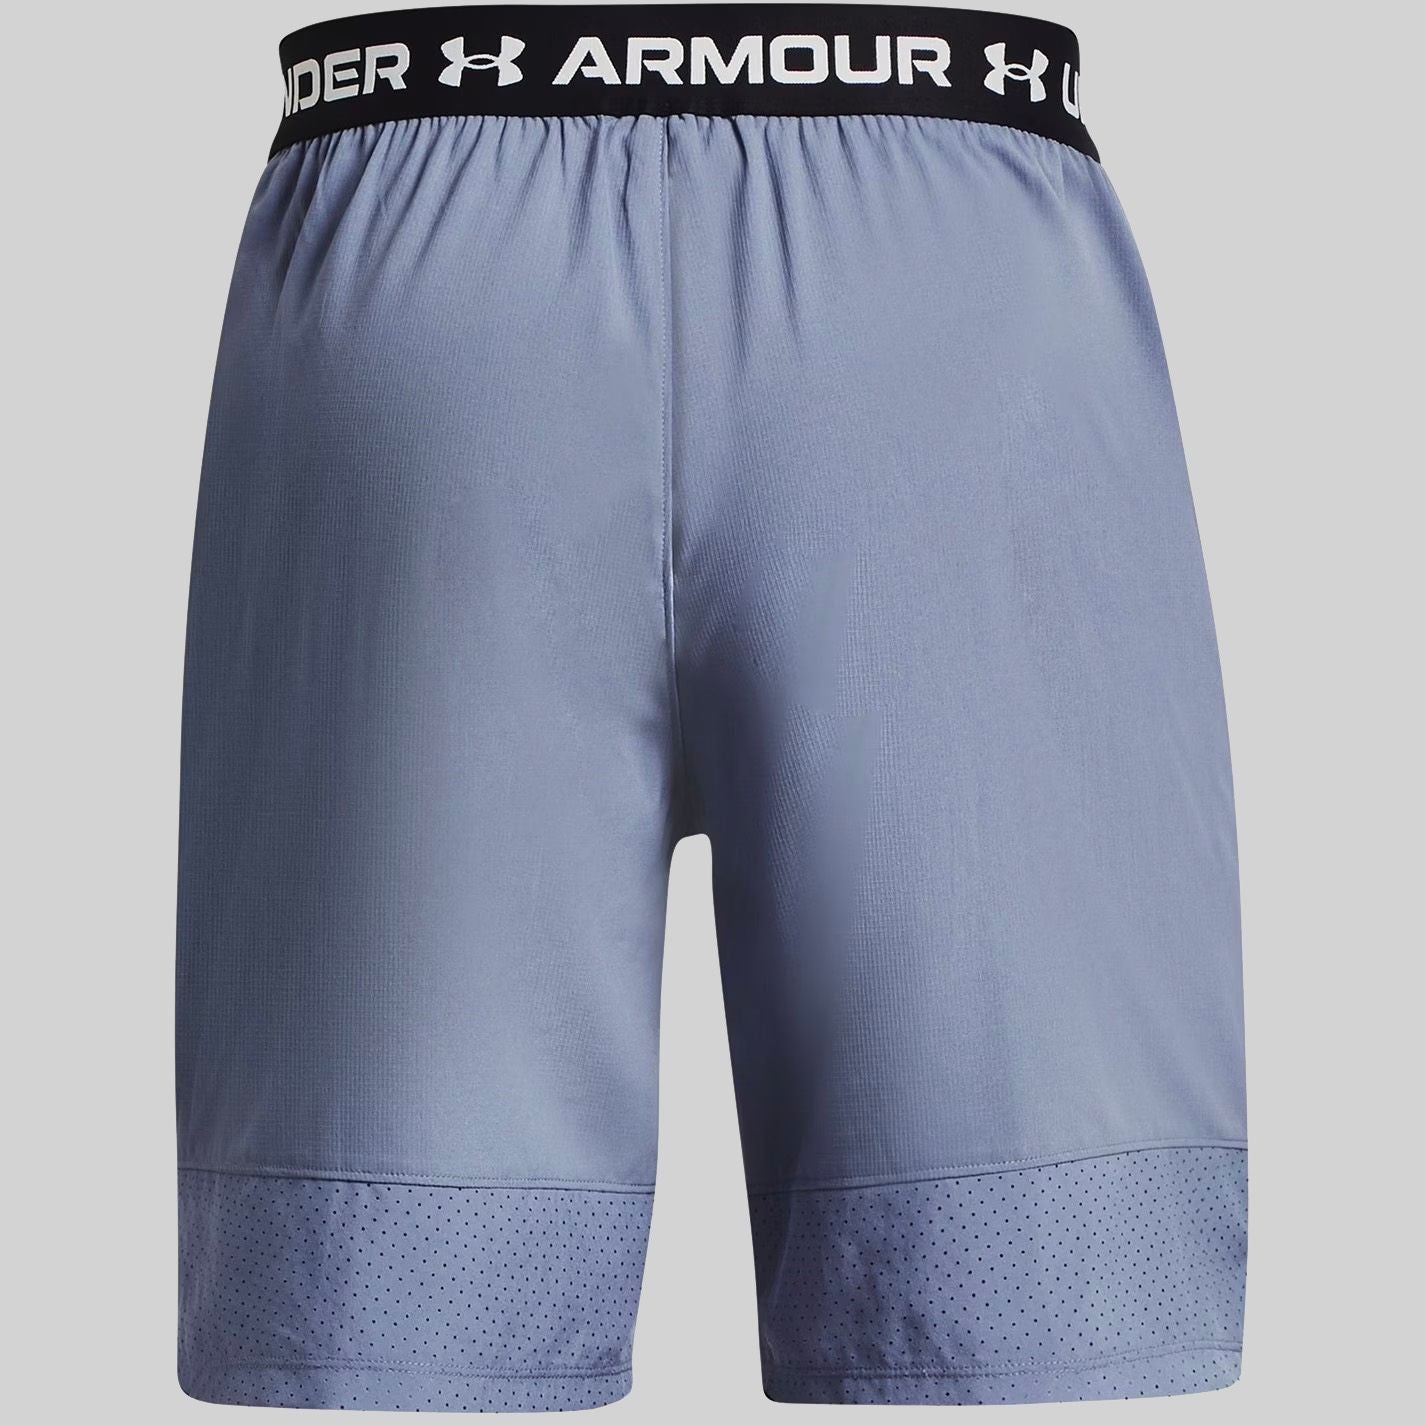 Under Armour Vanquish Shorts